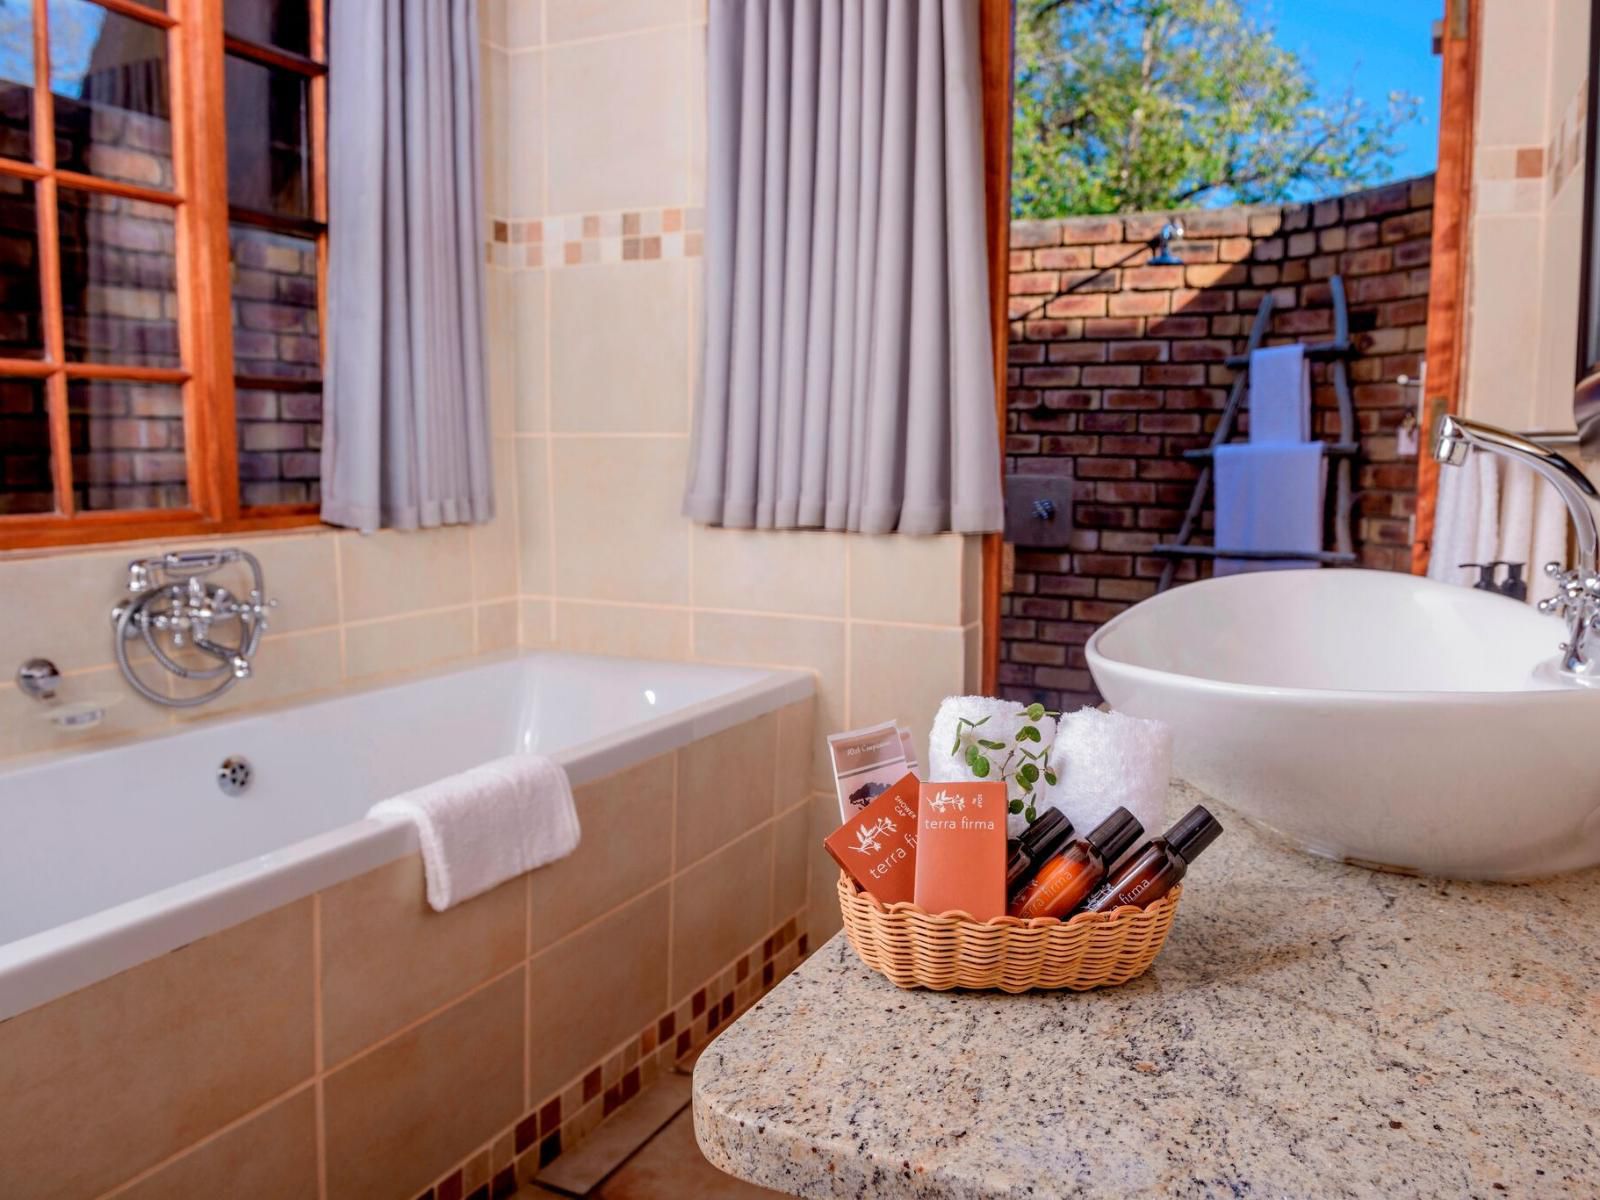 La Kruger Lifestyle Lodge Marloth Park Mpumalanga South Africa Bathroom